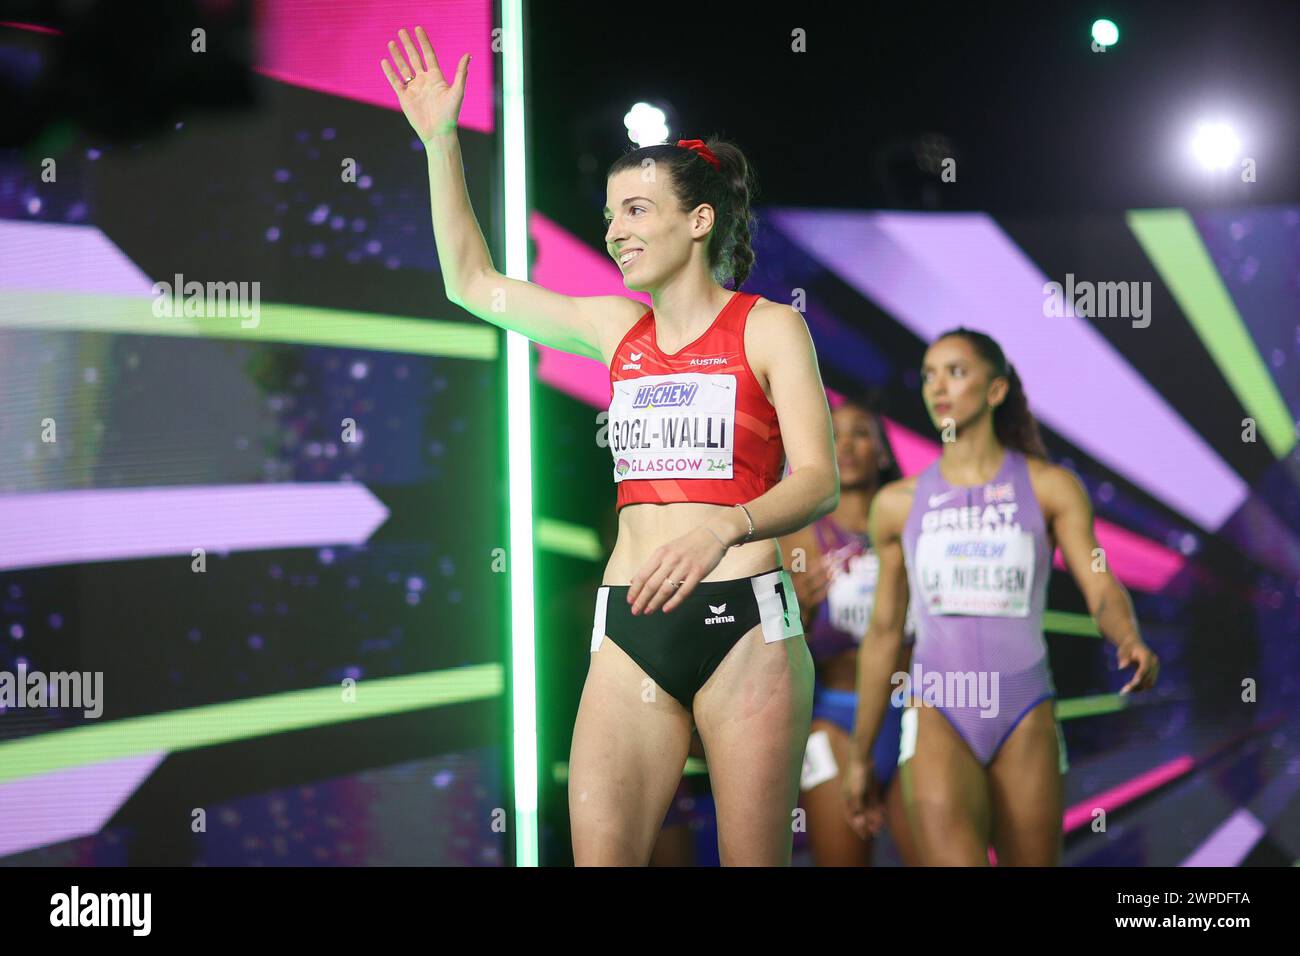 Susanne GoglWalli (AUT, 400 Metres) during the 2024 World Athletics